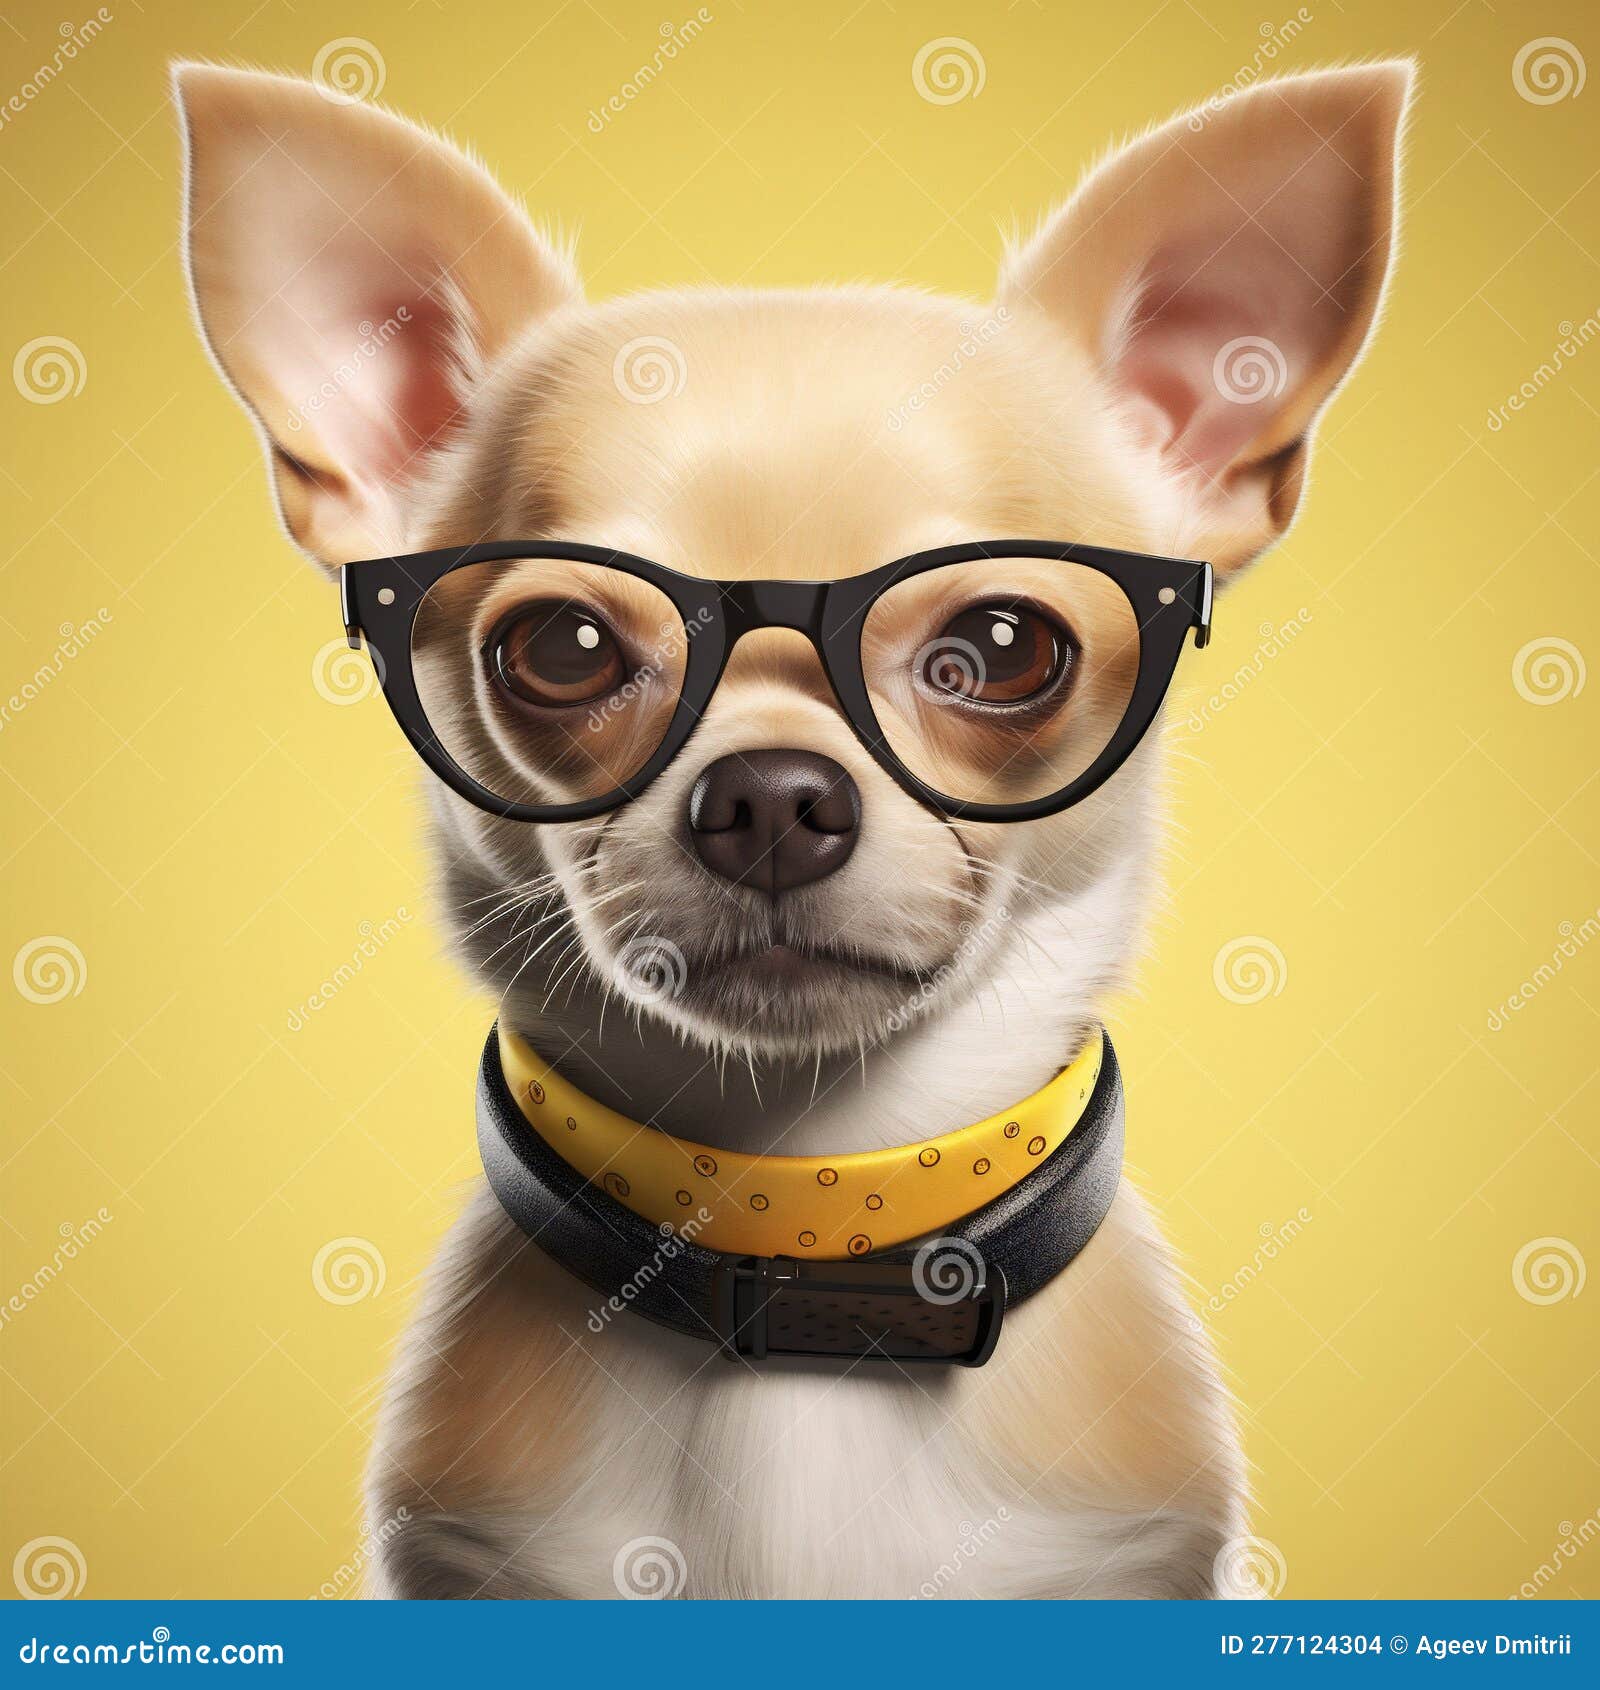 dog doggy cute chihuahua portrait animal background yellow pet puppy glasses. generative ai.